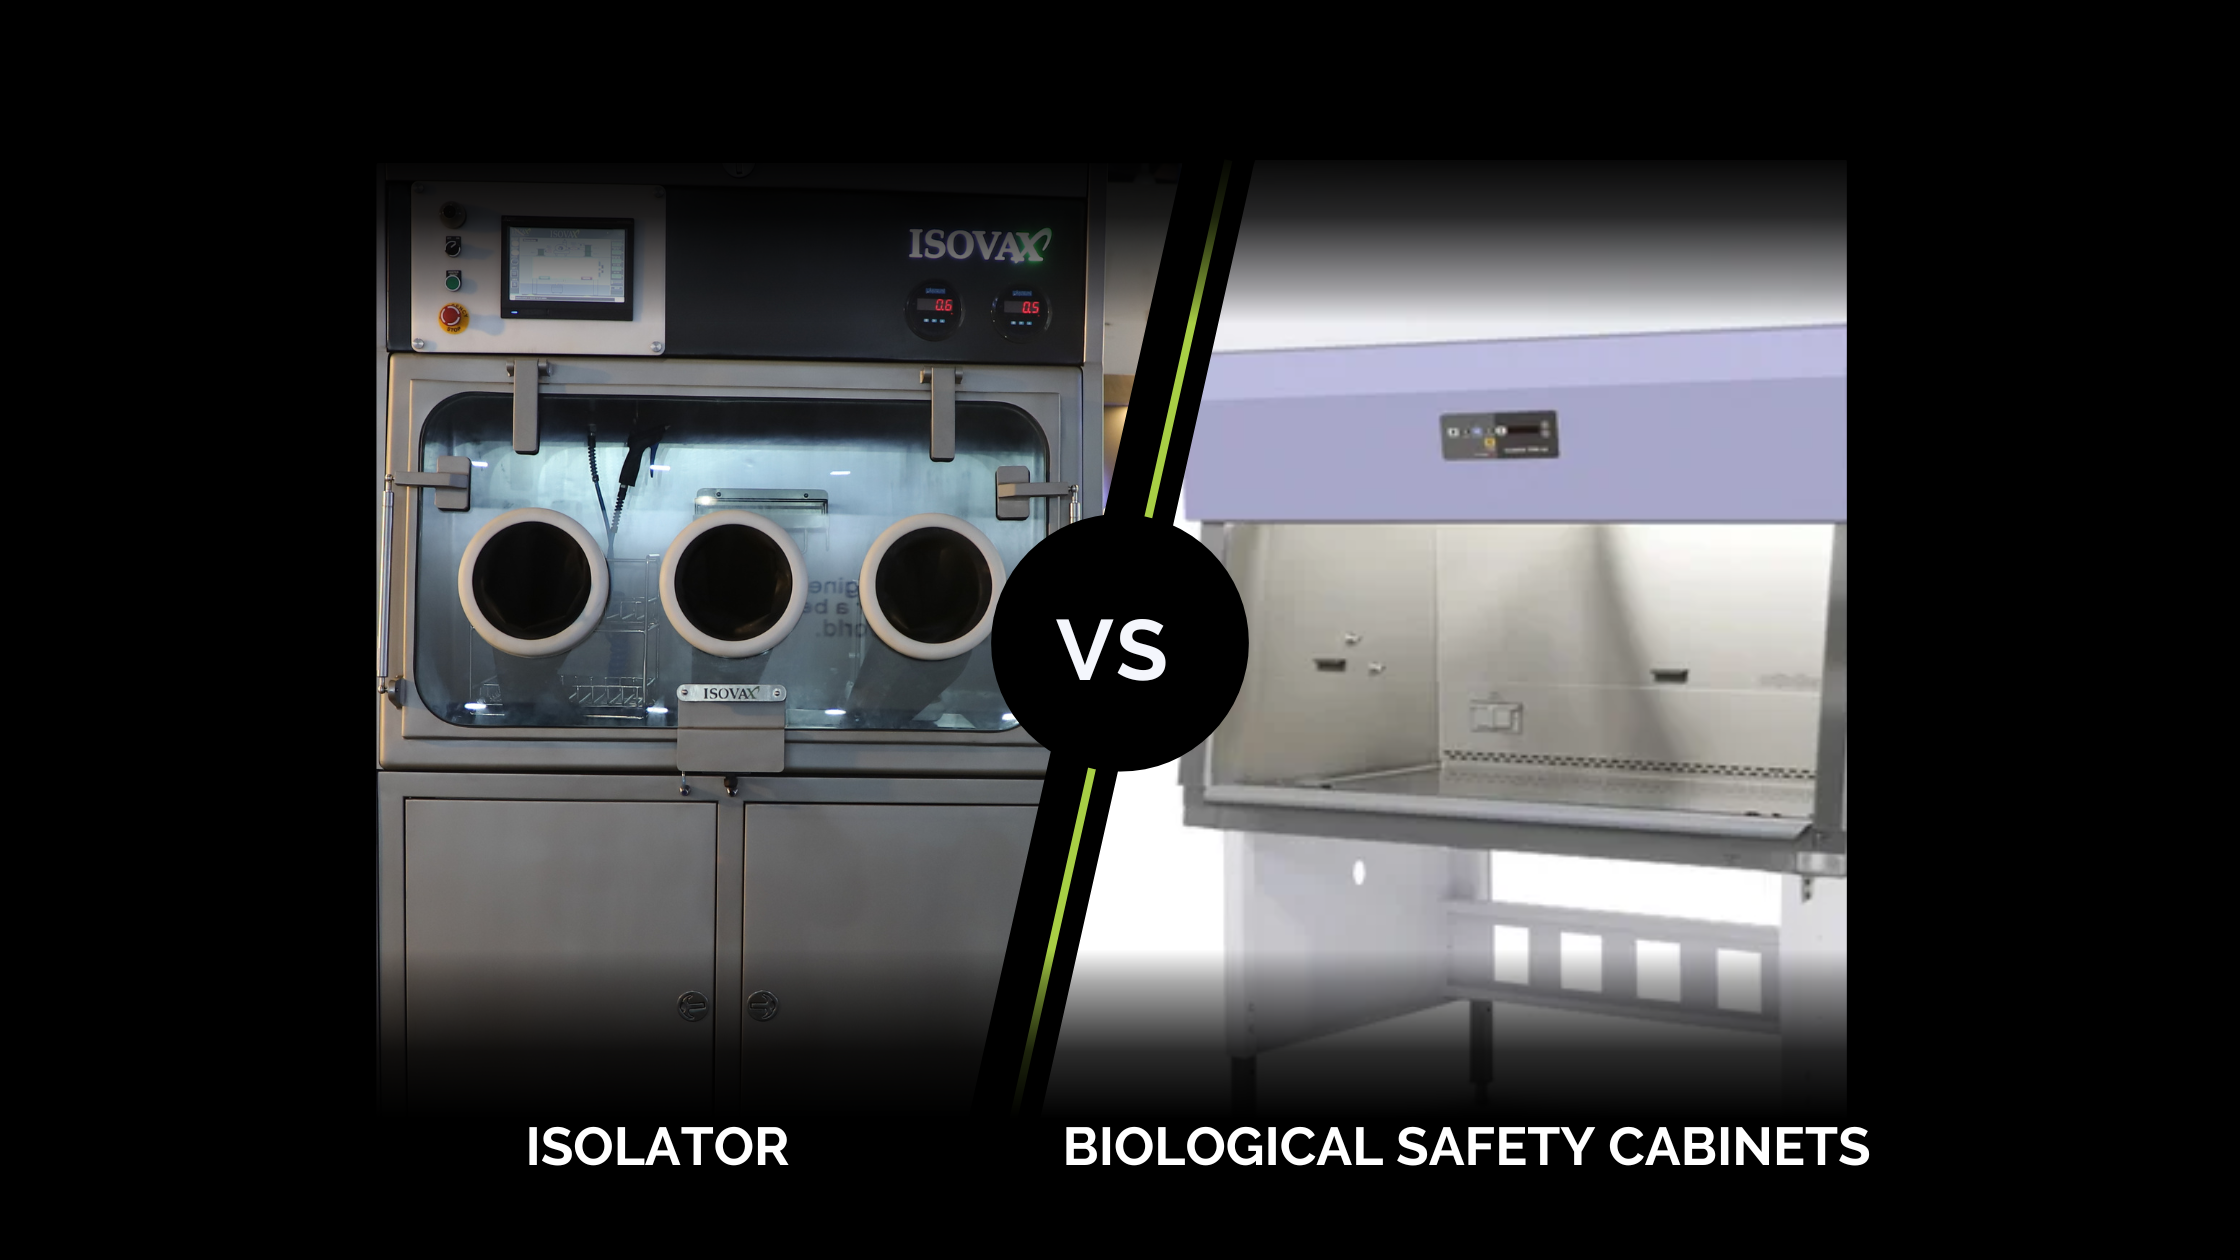 Isolator vs Biological safety cabinets